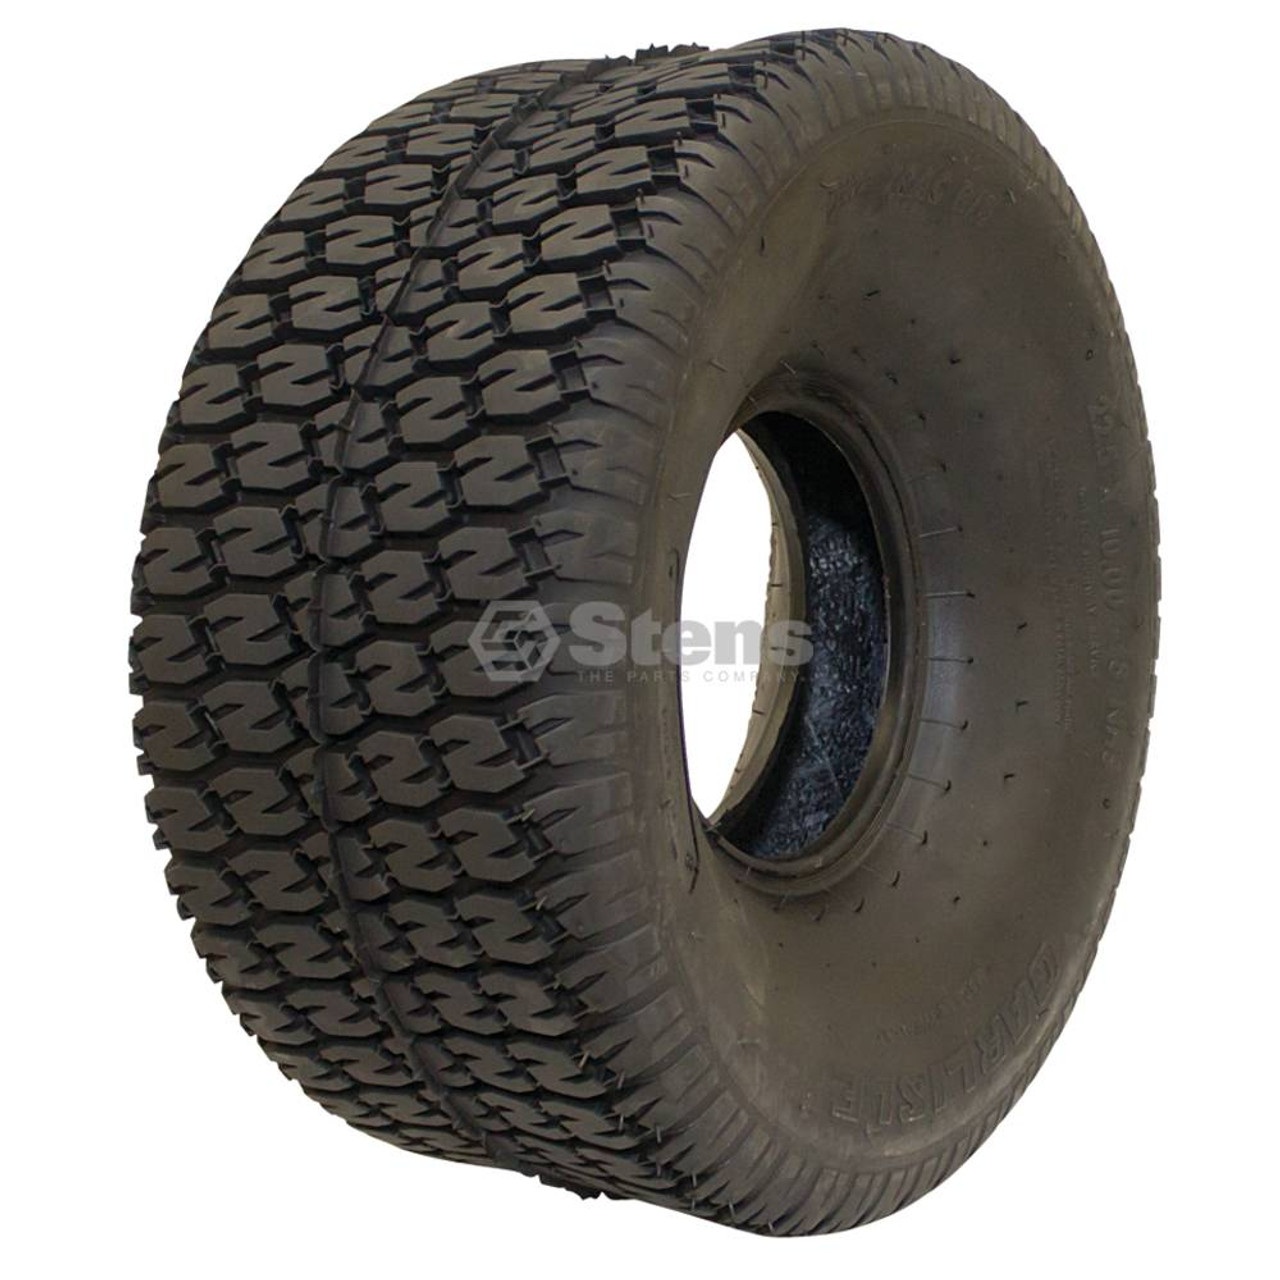 Tire / 22.5x10.00-8 Turftrac R/S 4 Ply